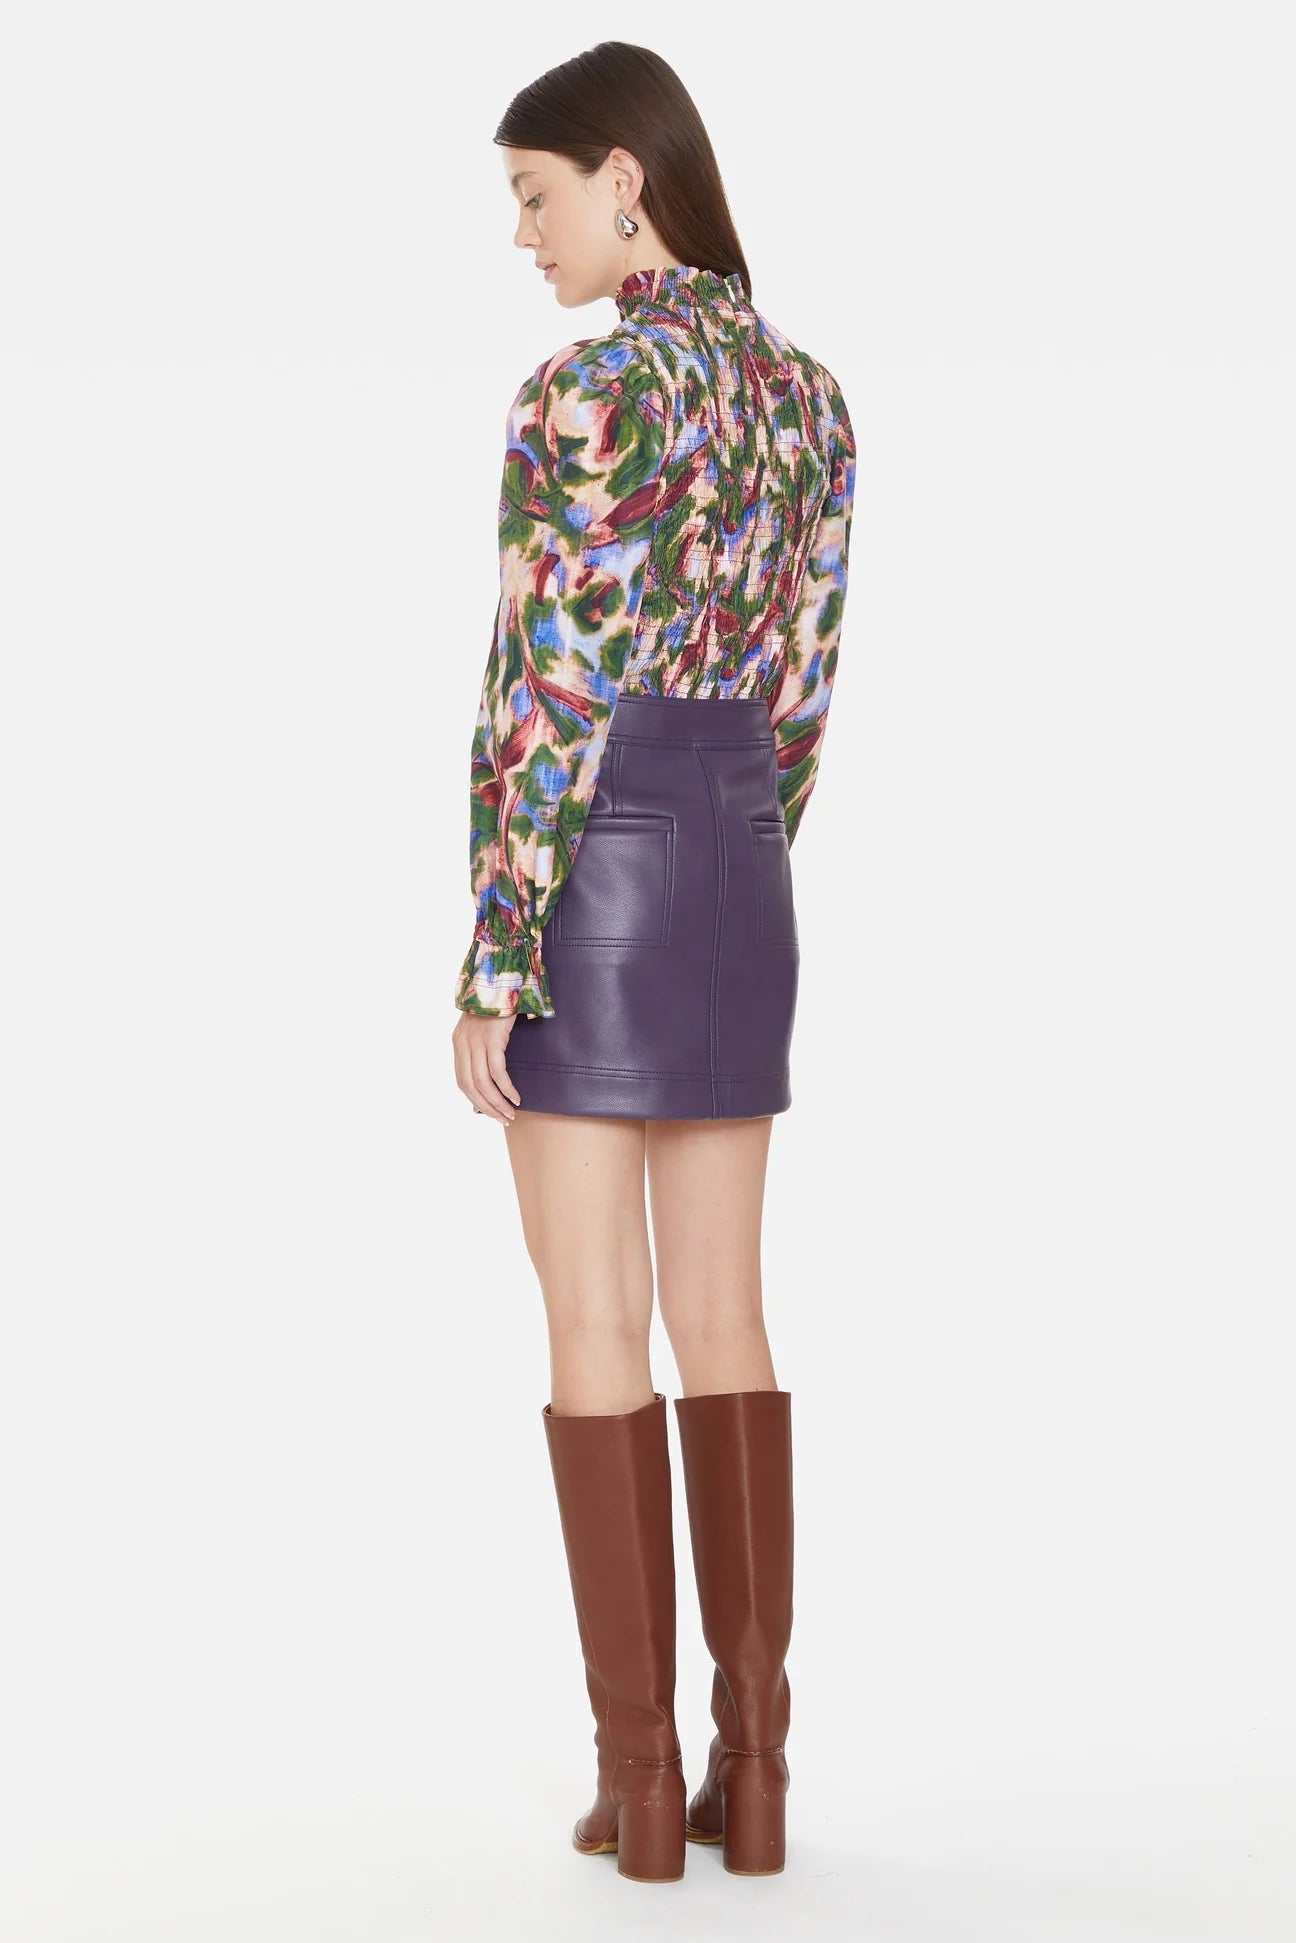 Marie Oliver Braden Skirt in Plum - Estilo Boutique